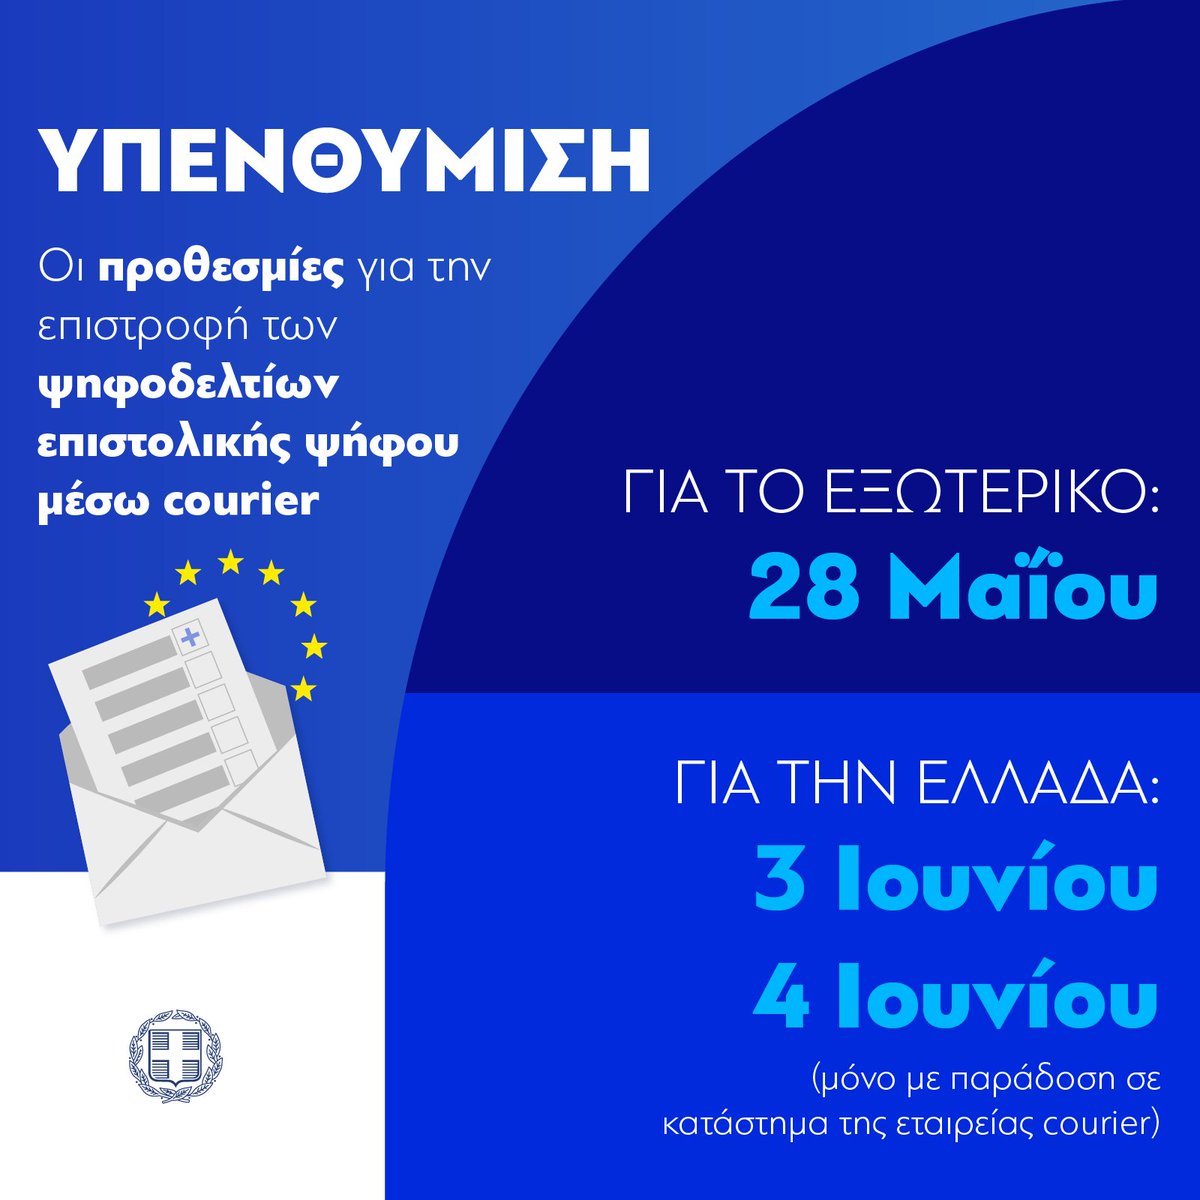 #PsiifizoMeEpistoliki
Ευρωεκλογές, 9 Ιουνίου 📨➡️🗳️
Παρέλαβες τον φάκελο με την επιστολική ψήφο - Mην ξεχαστείς! 

Μέχρι 28 Μαΐου, πρέπει να τον παραδώσεις στην εταιρεία ταχυμεταφορών που τον έφερε! Μέσω ☎️ ή 💻 κλείσε ραντεβού!

Για να προλάβει να φτάσει στην Αθήνα έγκαιρα!